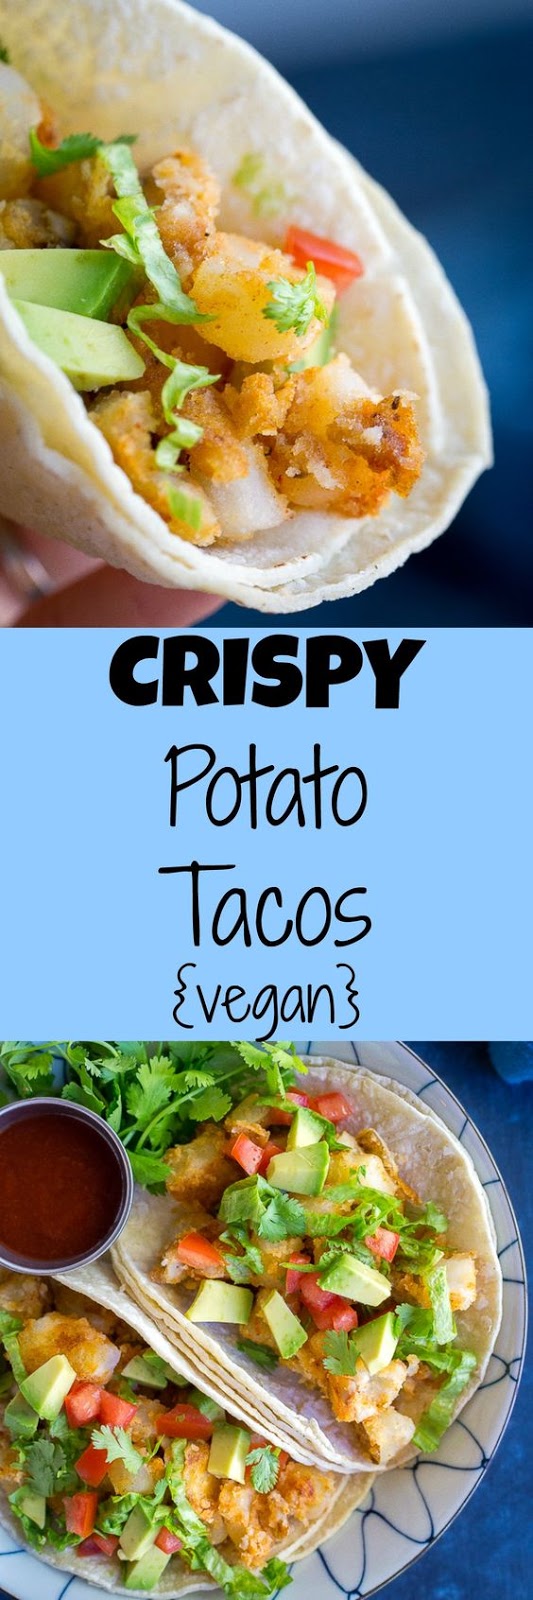 Crispy Potato Tacos